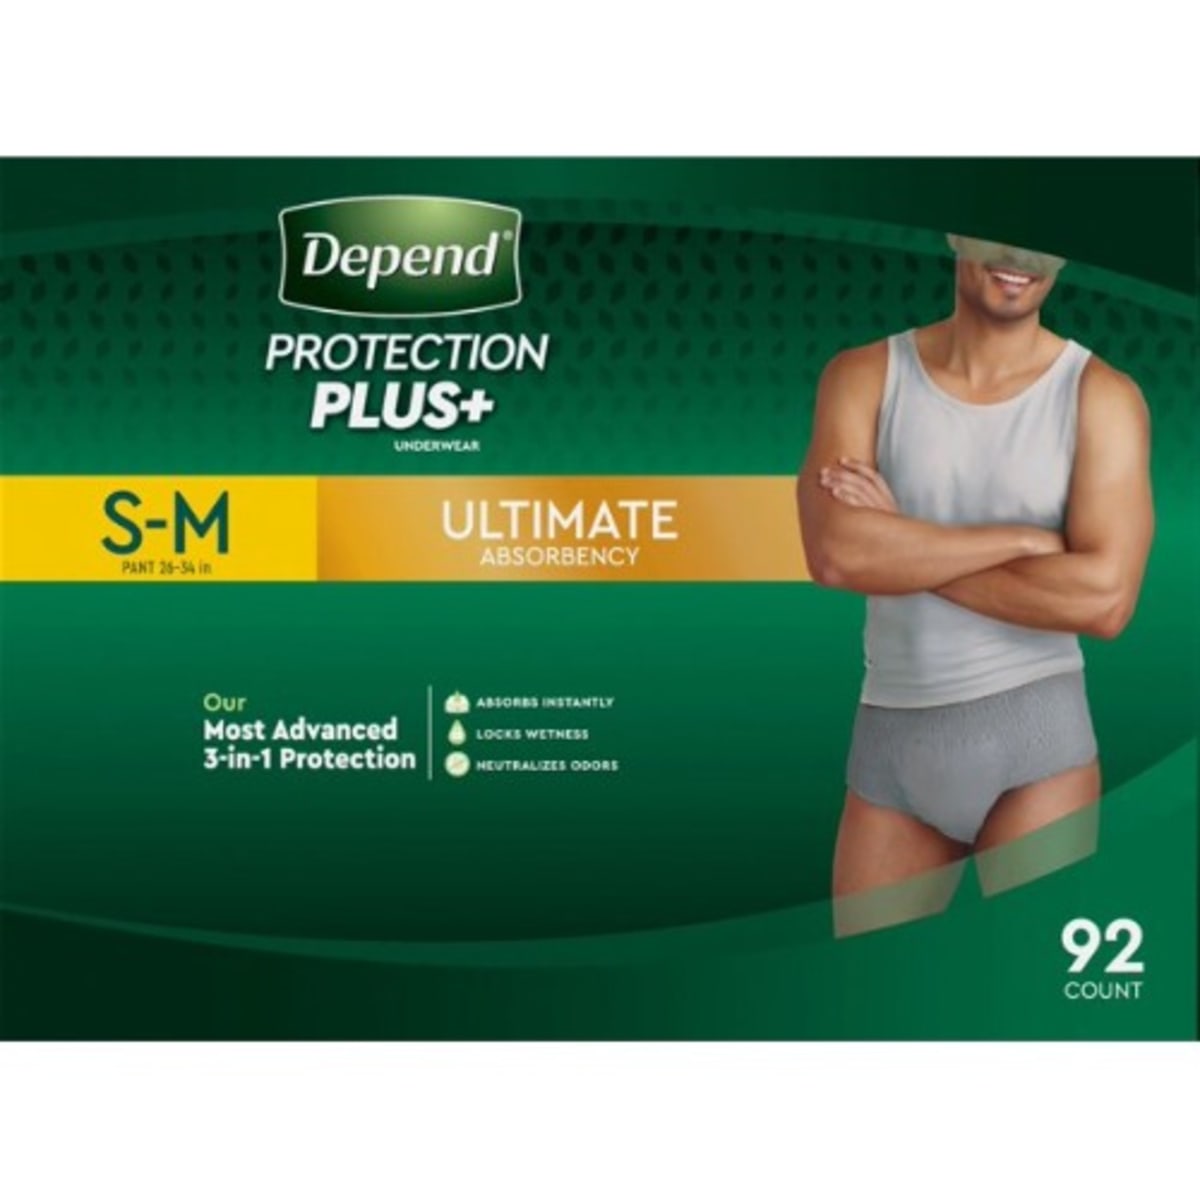 Depend Fit-Flex Underwear for Men (Small/Medium)